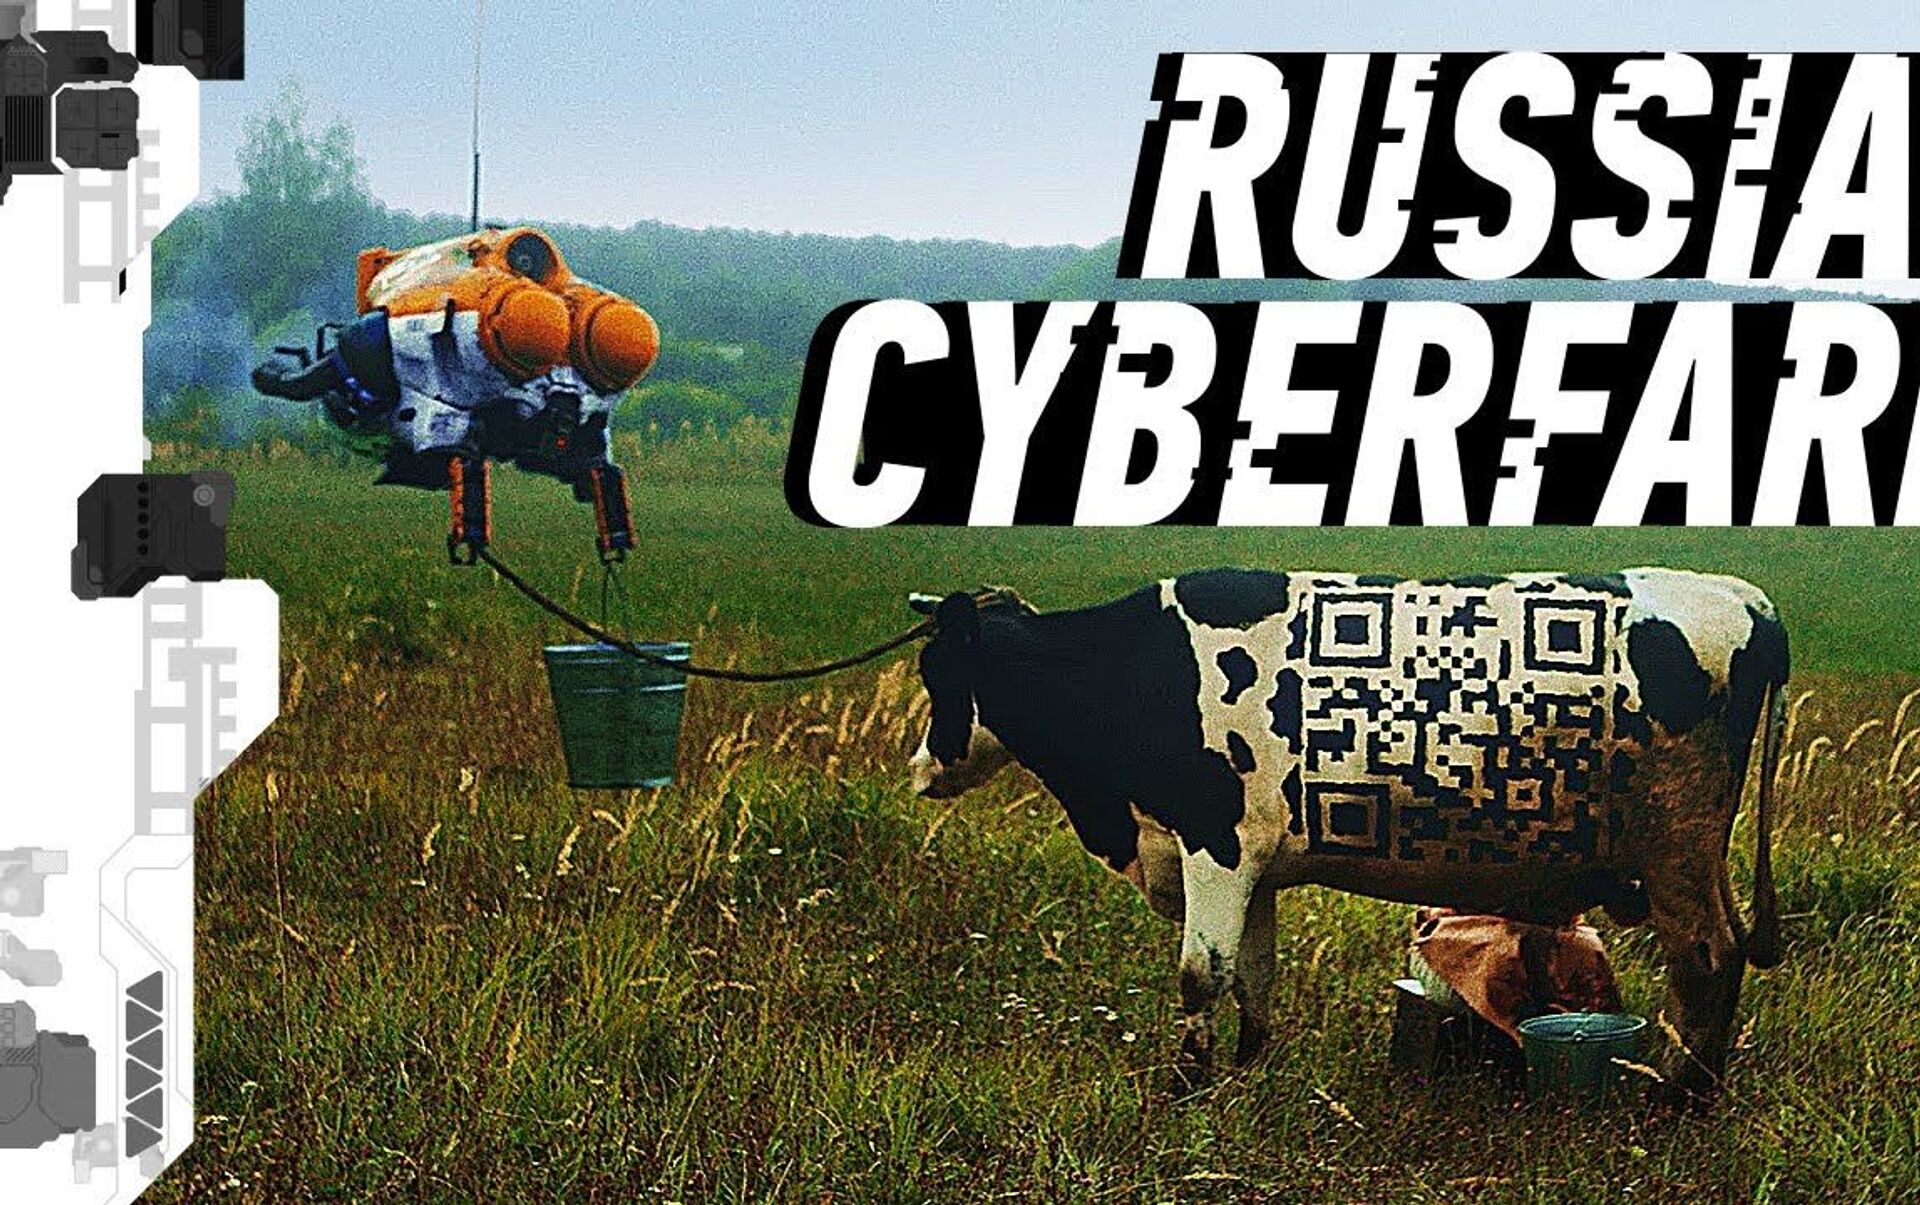 Russian cyberpunk farm смотреть фото 81